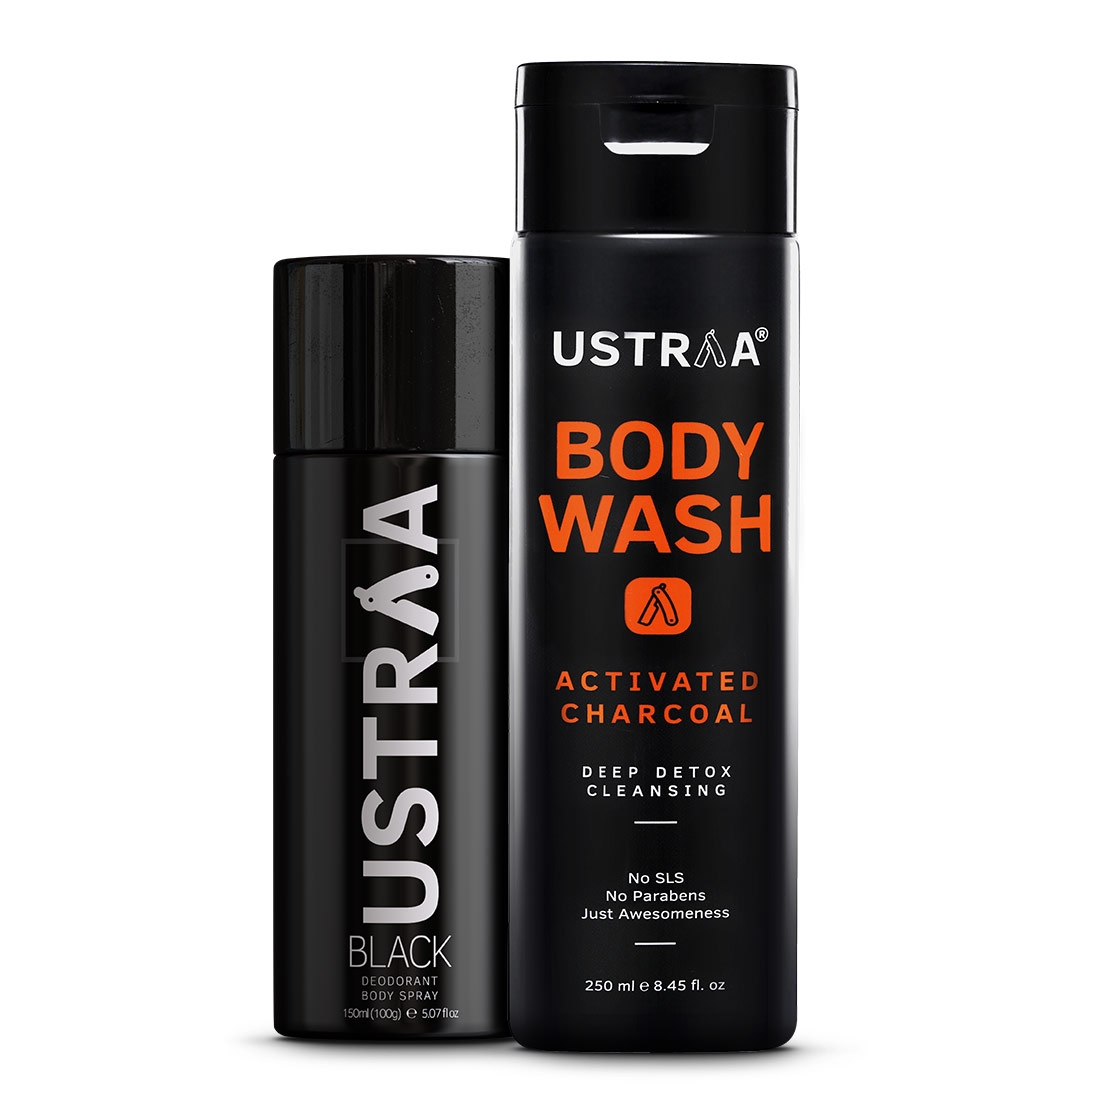 Ustraa | Ustraa Black Deodorant 150ml & Body Wash Activated Charcoal 250ml